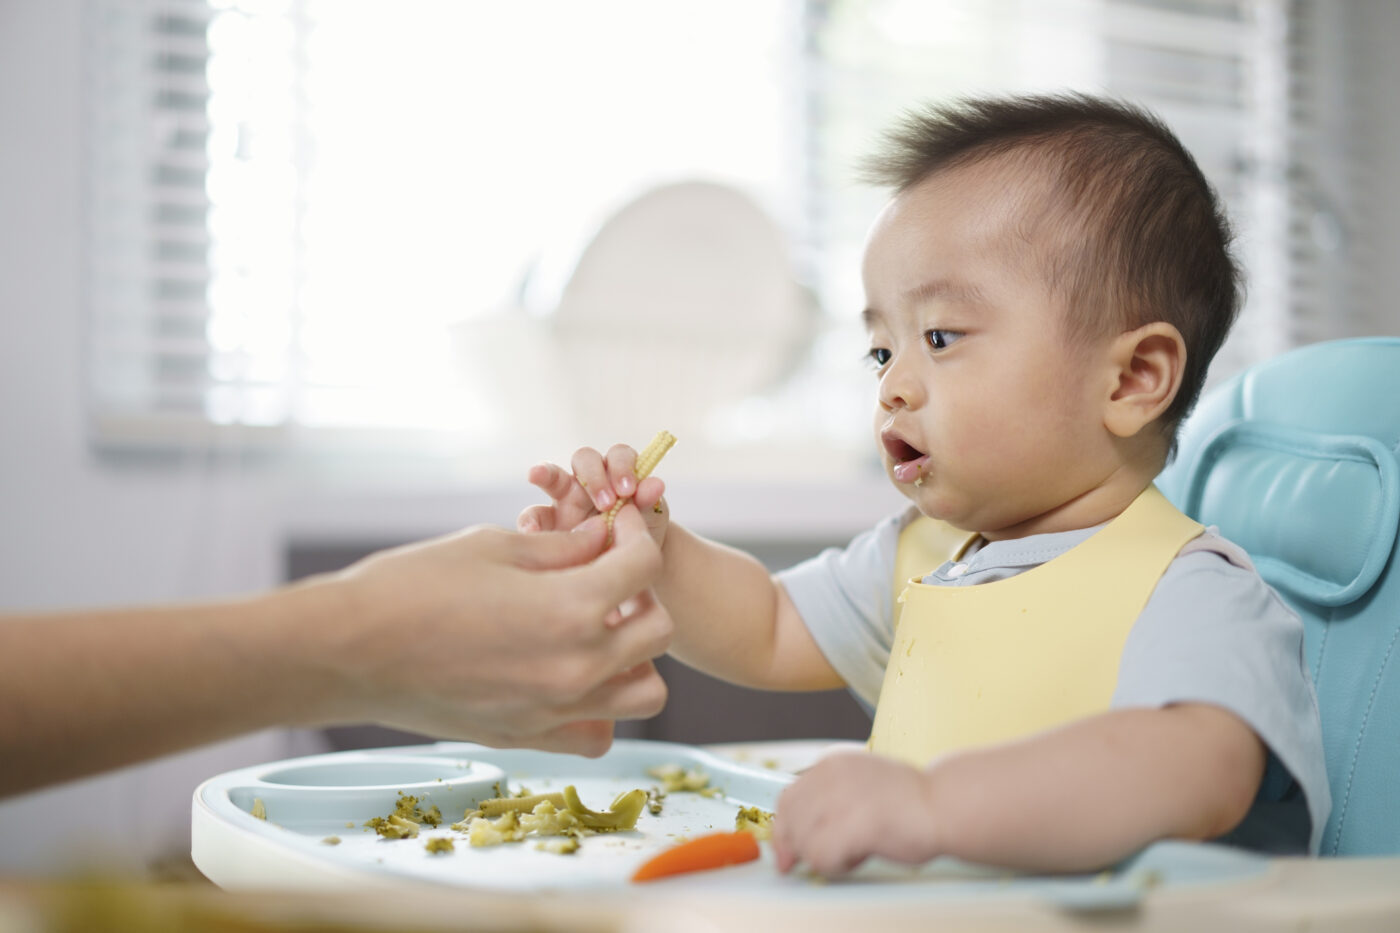 The Infant-Driven Feeding™ Program